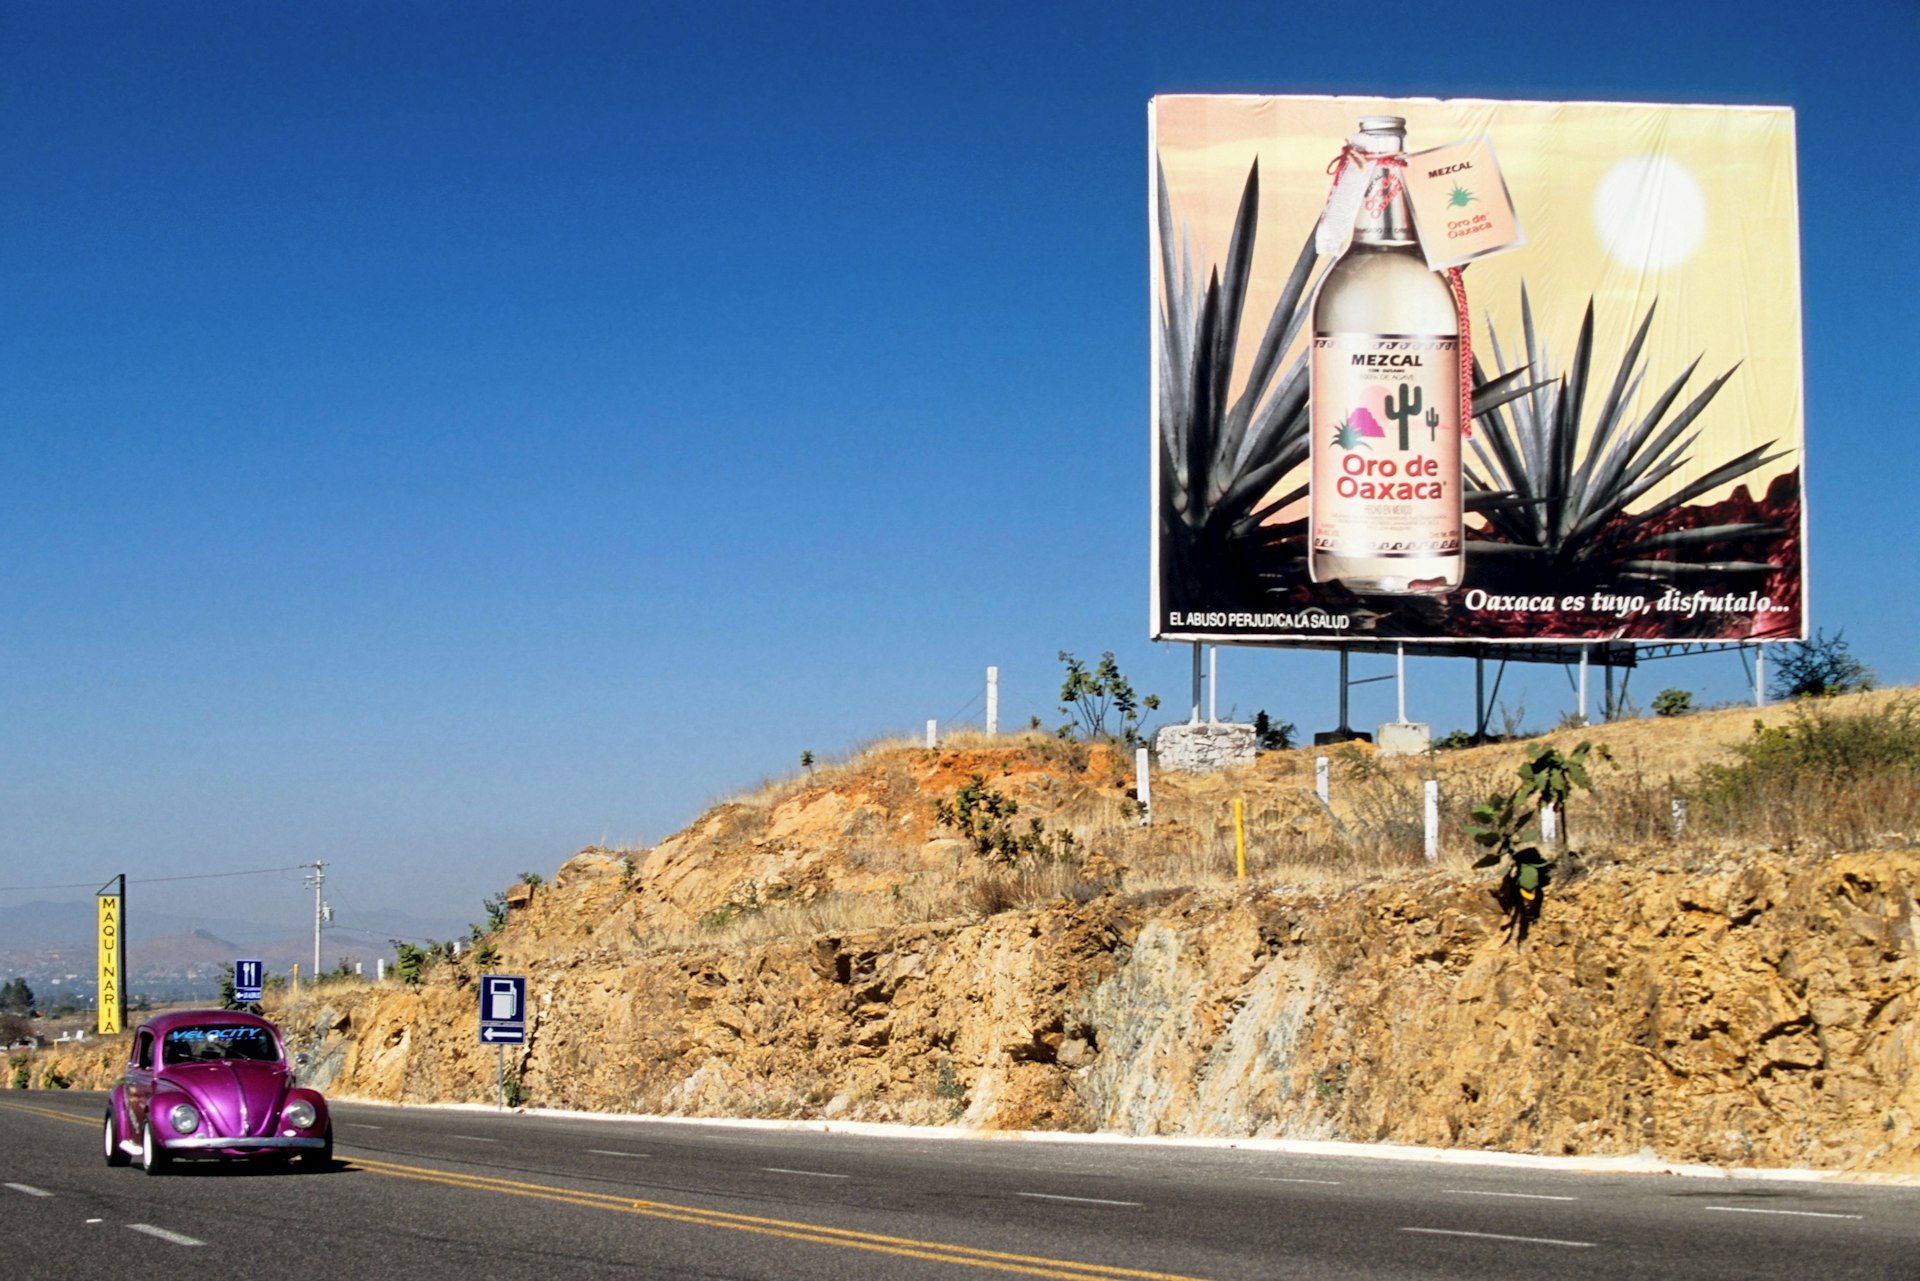 Mezcal Advertisement Close To Santiago De Matatlan, Province Of Oaxaca, Mexico (Photo by Marka/UIG via Getty Images)